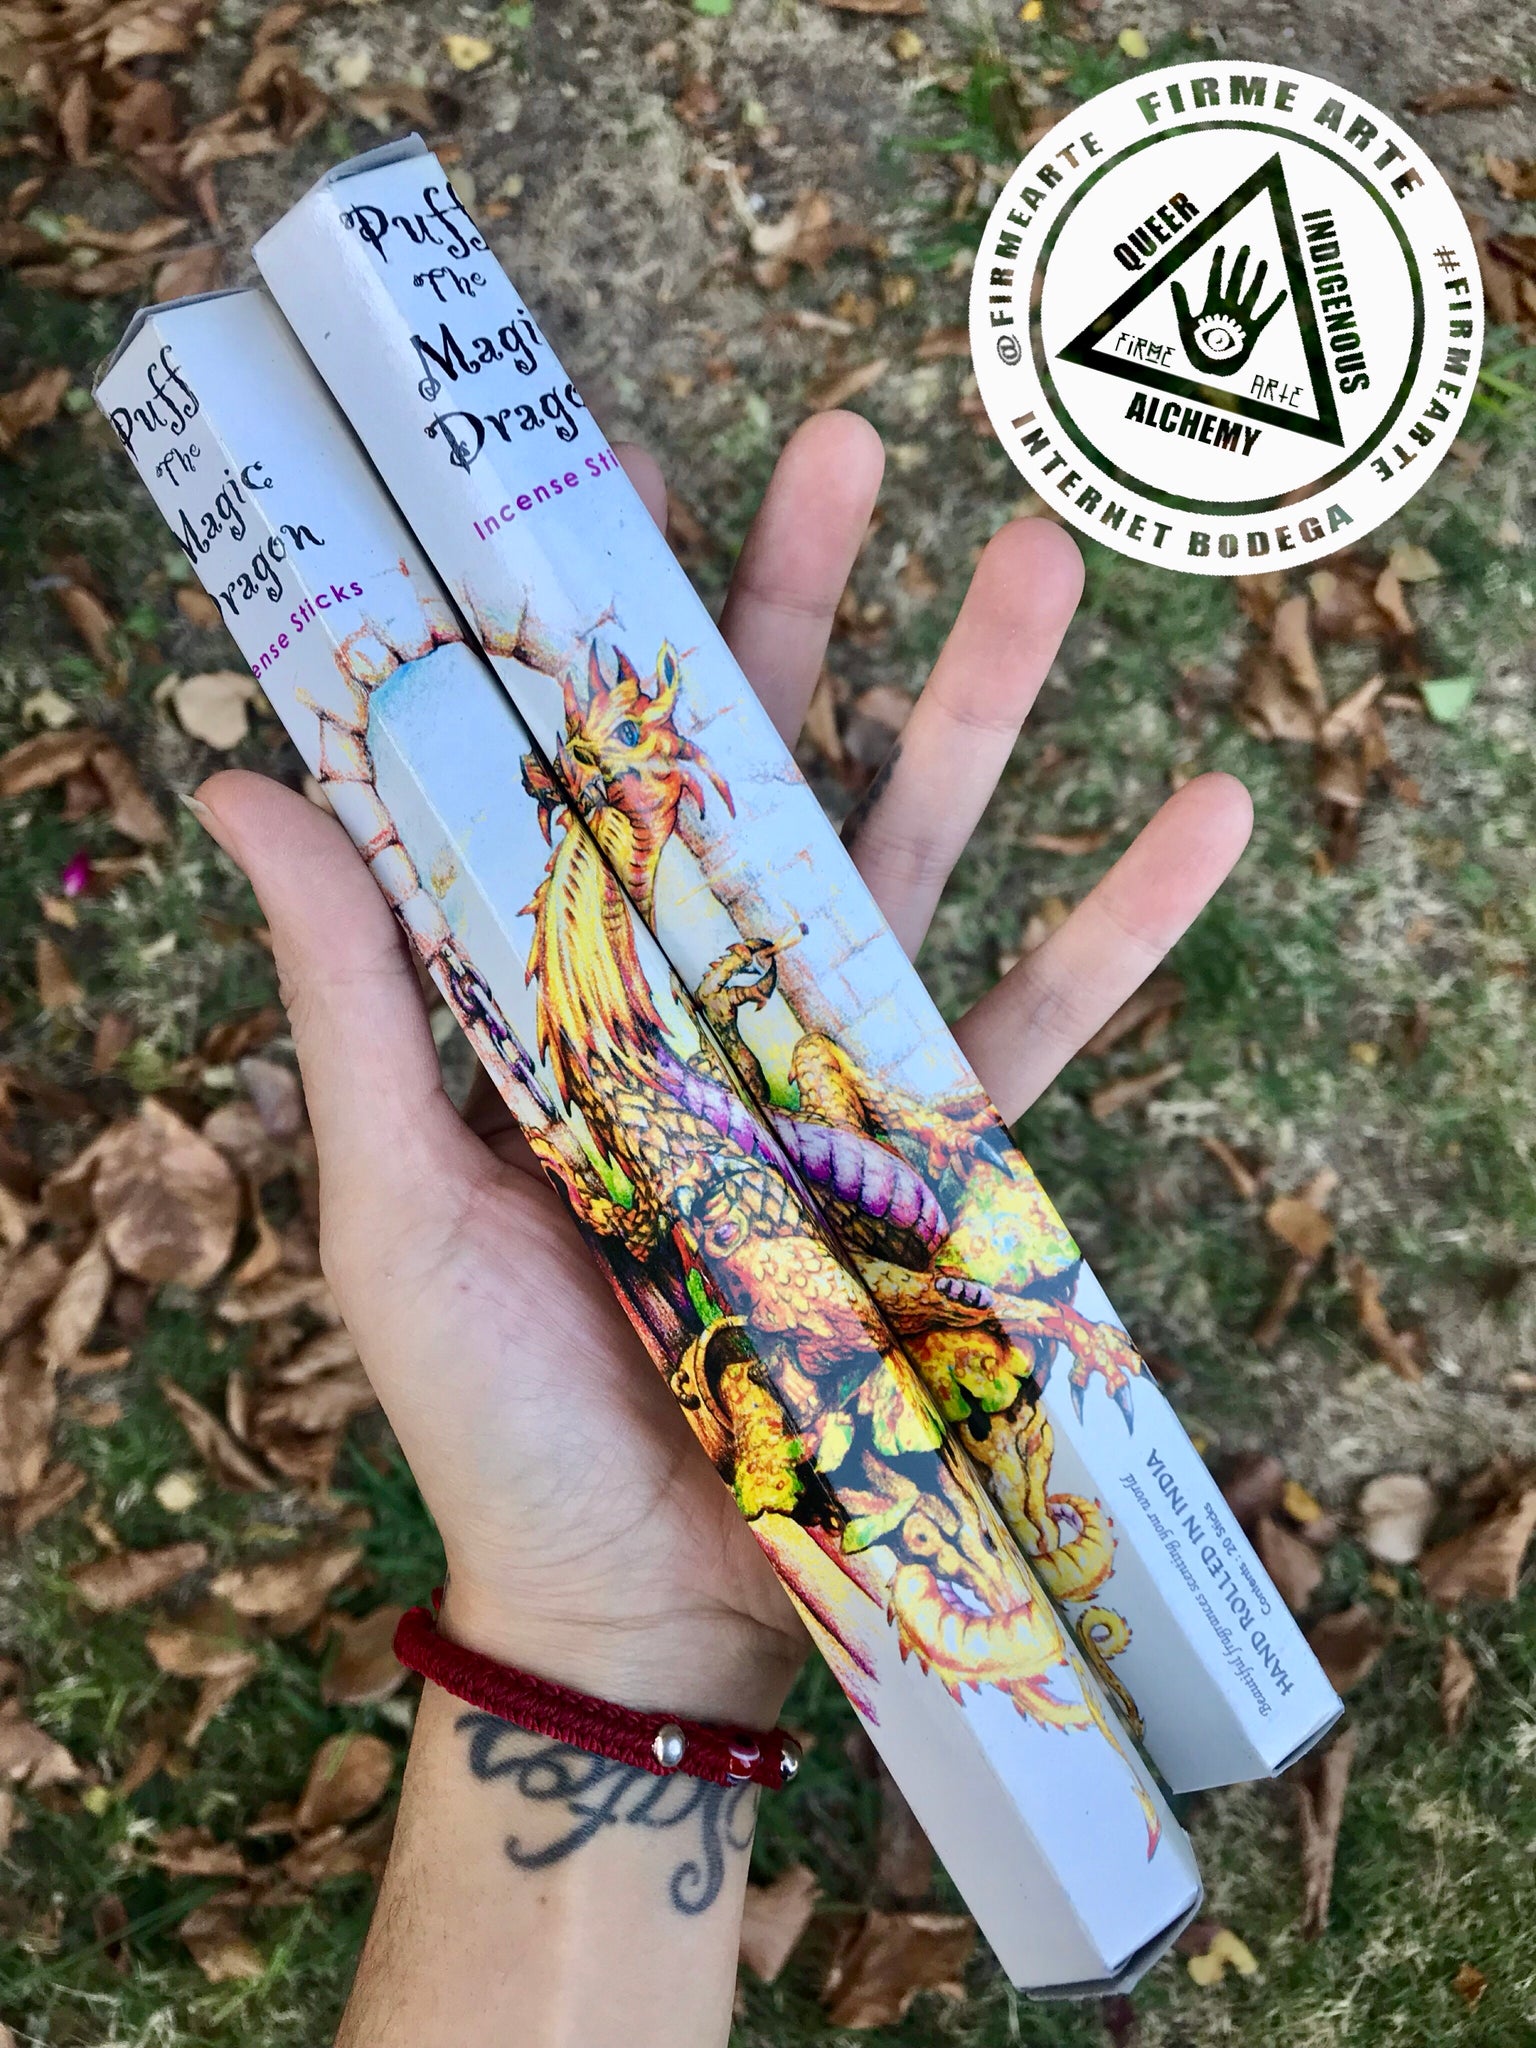 Incense sticks | Puff The Magic Dragon